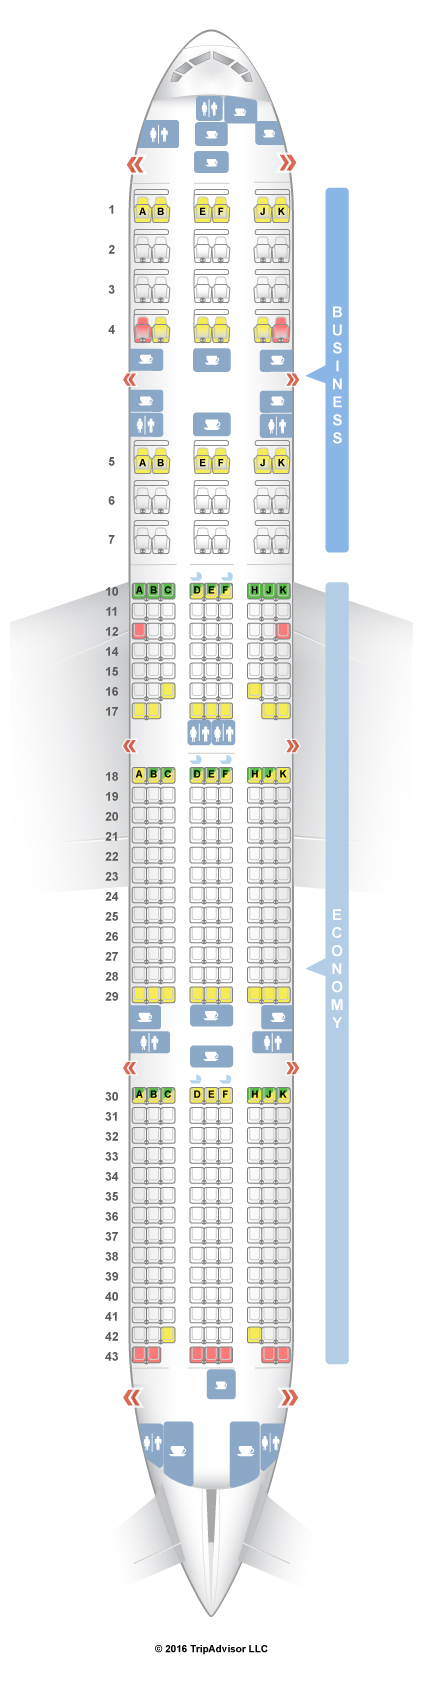 Seat Map And Seating Chart Boeing Er Qatar Airways V Qatar My XXX Hot